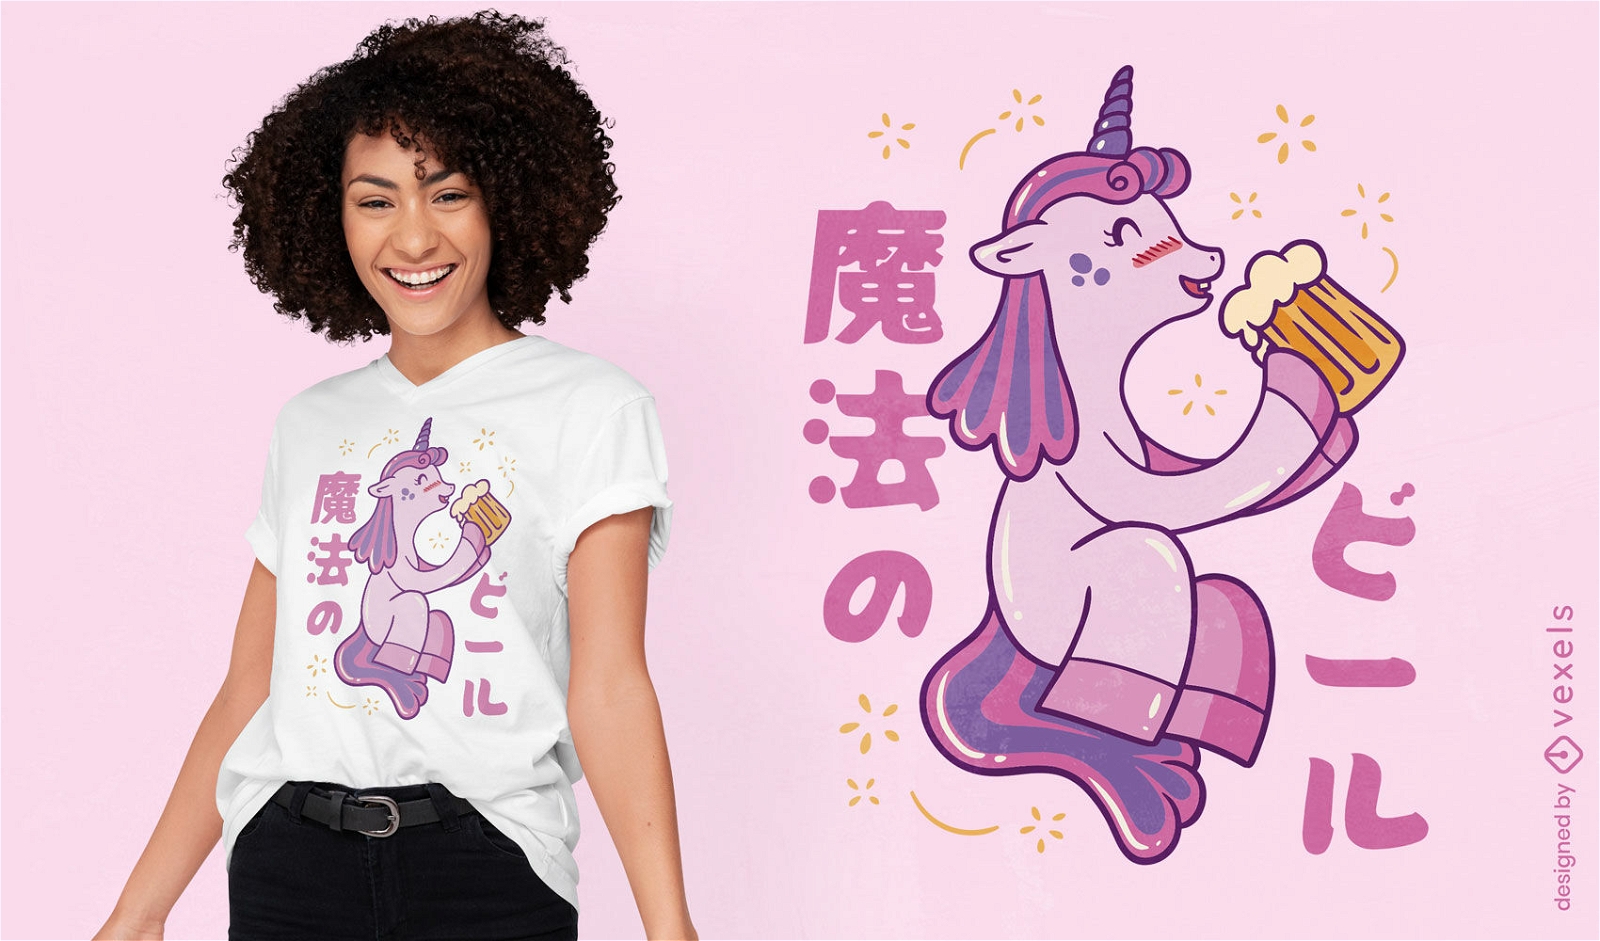 Cute unicorn beer t-shirt design